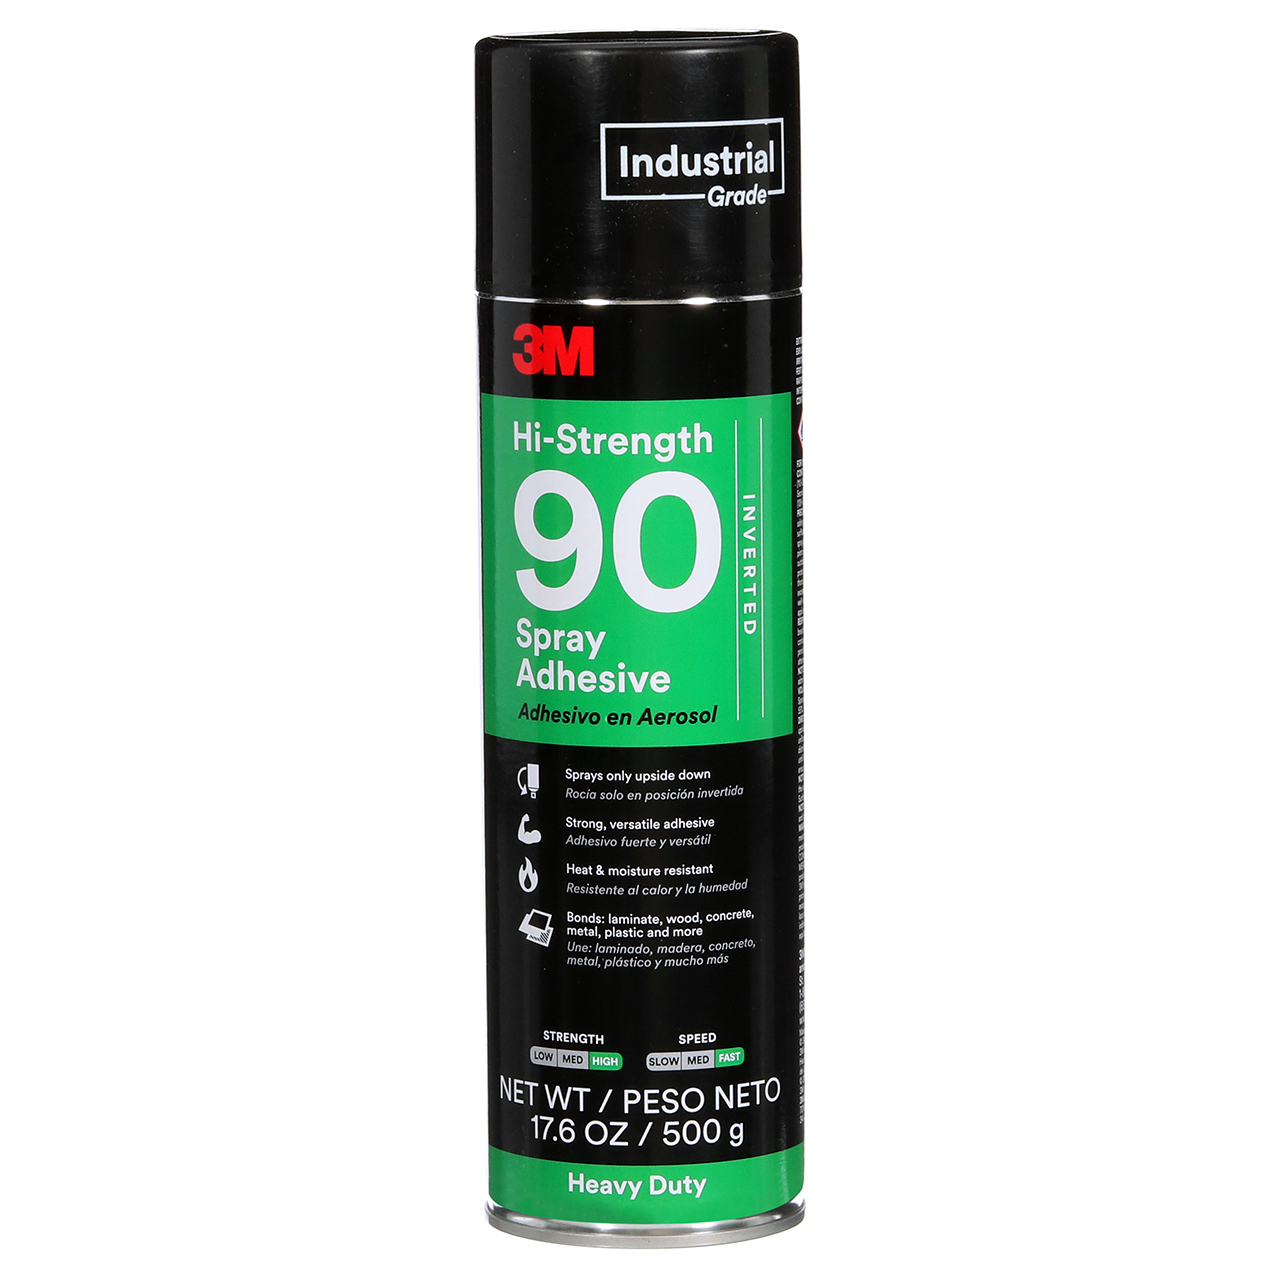 3M Hi-Strength 90 Contact Spray Adhesive, 17.6 oz, 1 Can, Green